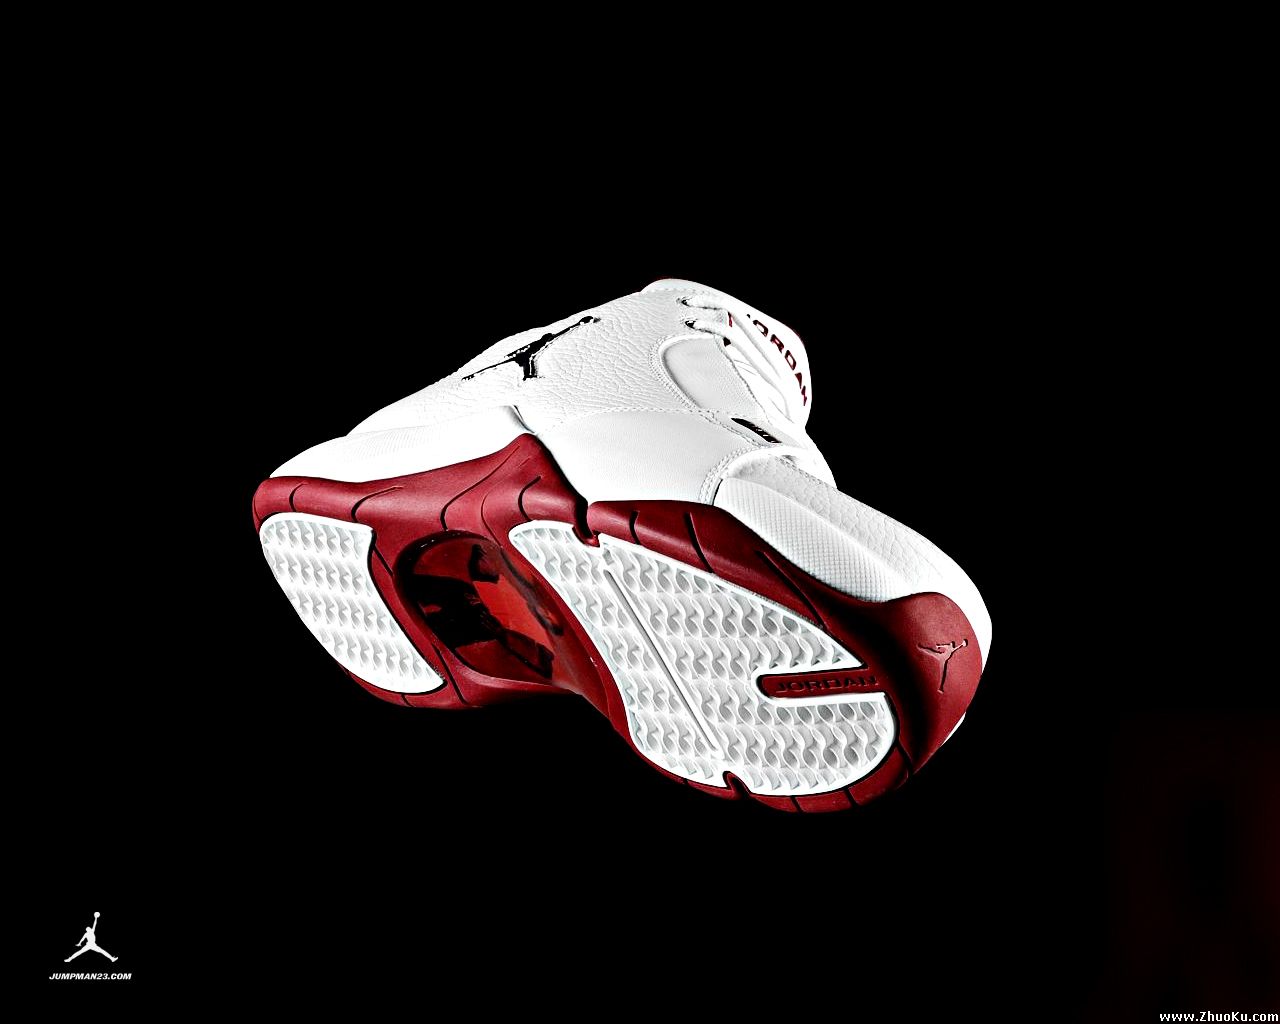 Jordan Sneakers Wallpaper Release Date Specs Re Redesign And